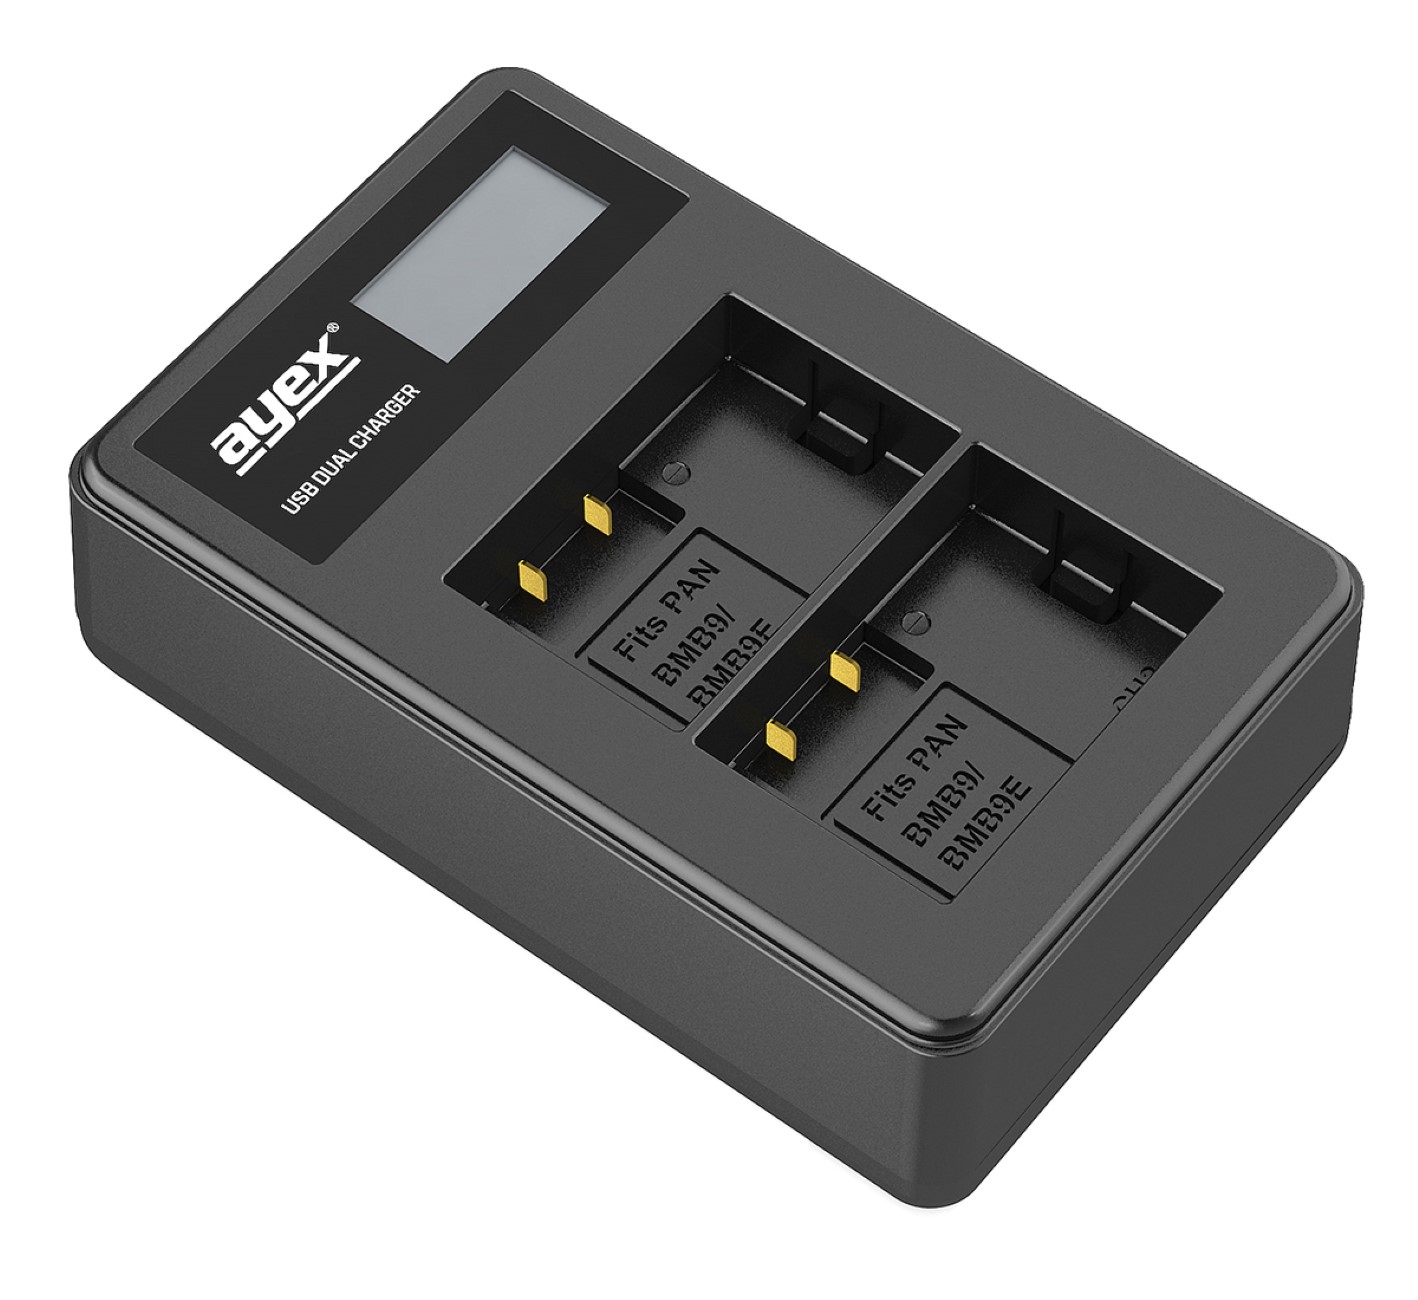 ayex USB Dual Ladegerät für Panasonic DMW-BMB9 DMW-BMB9E Akkus